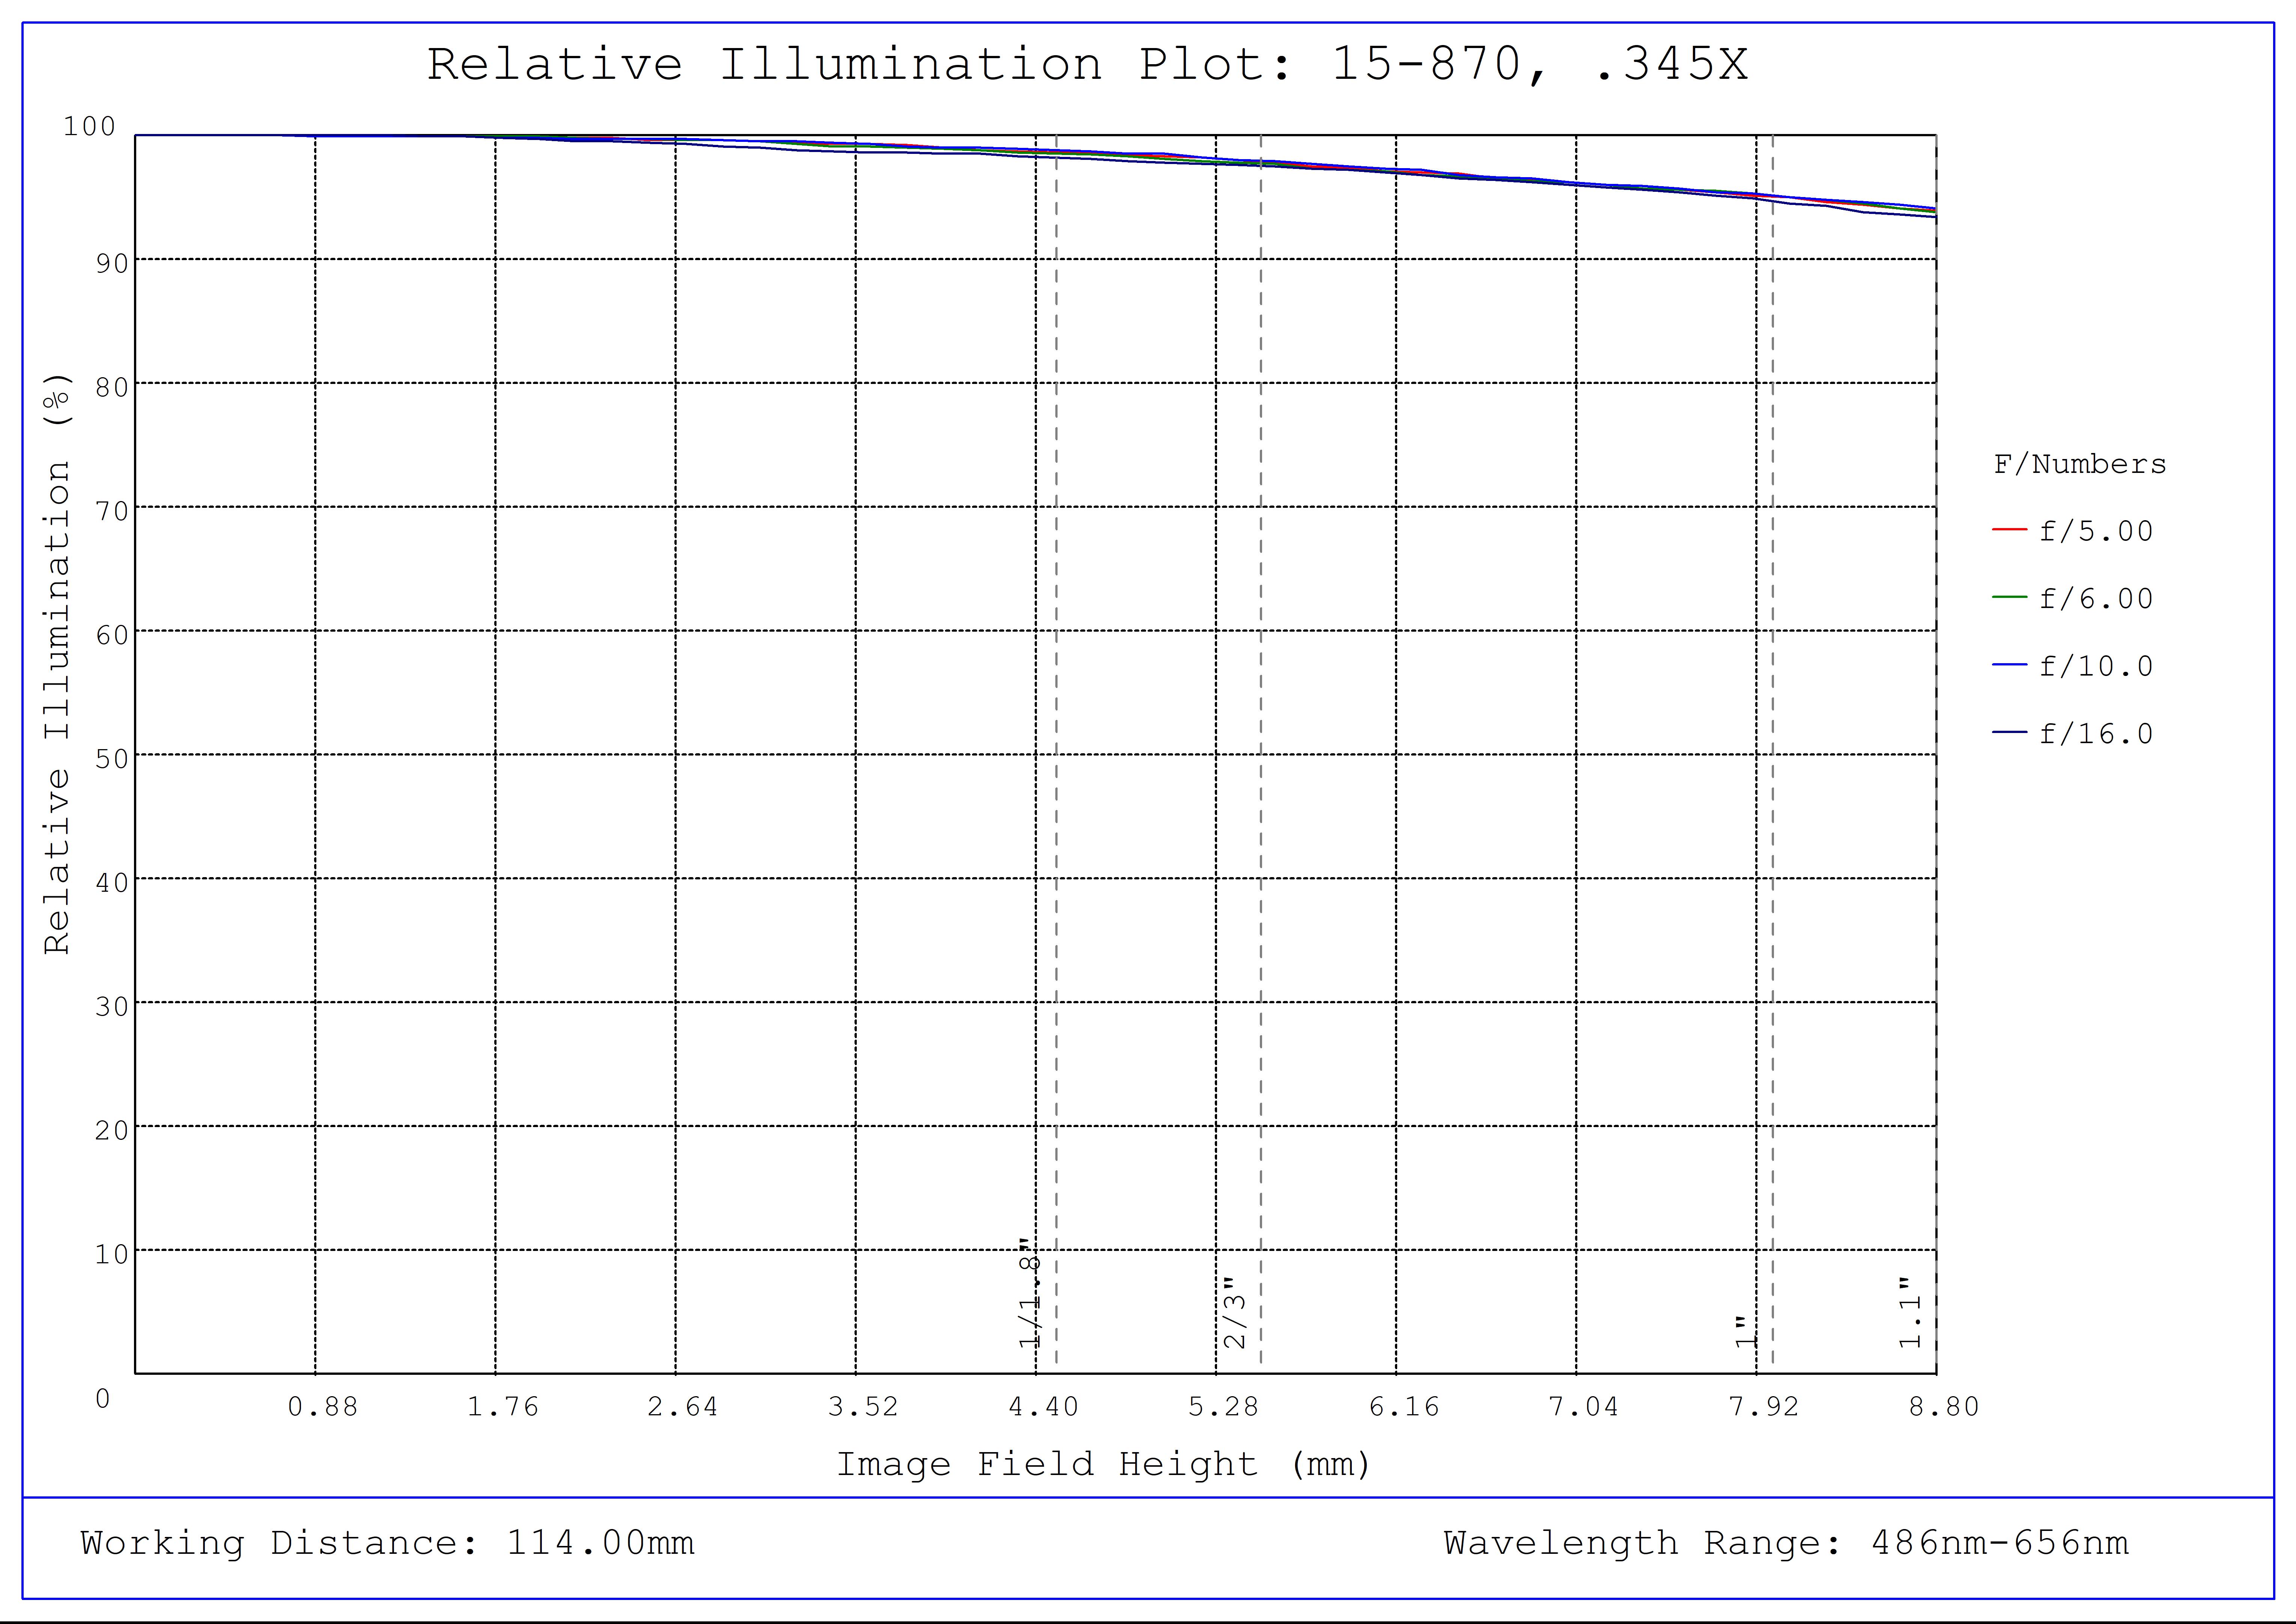 #15-870, 0.345X CobaltTL Telecentric Lens, Relative Illumination Plot